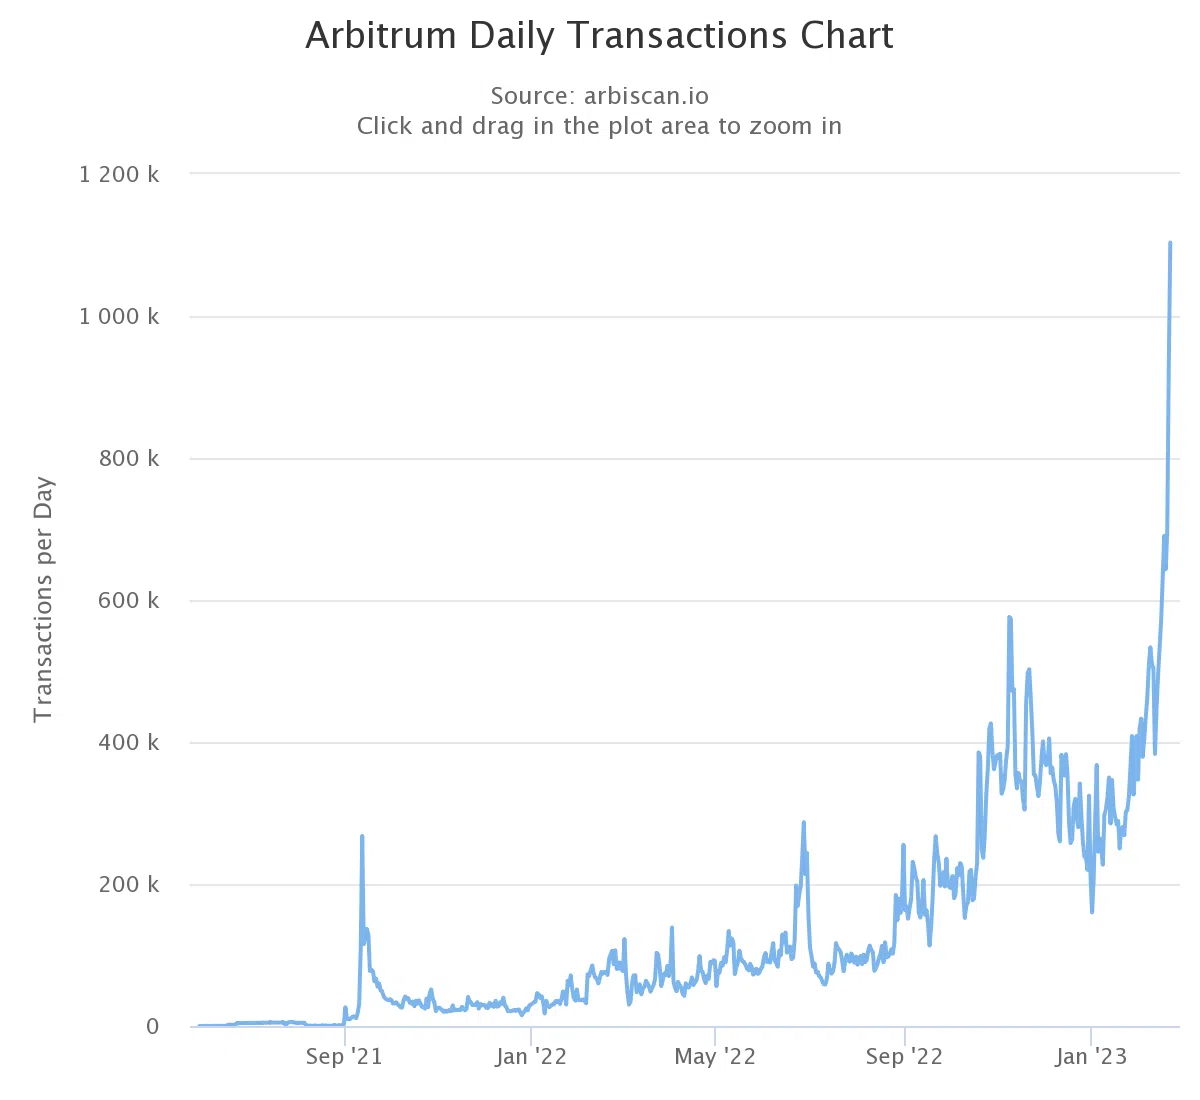 Arbitrum daily transactions chart. 